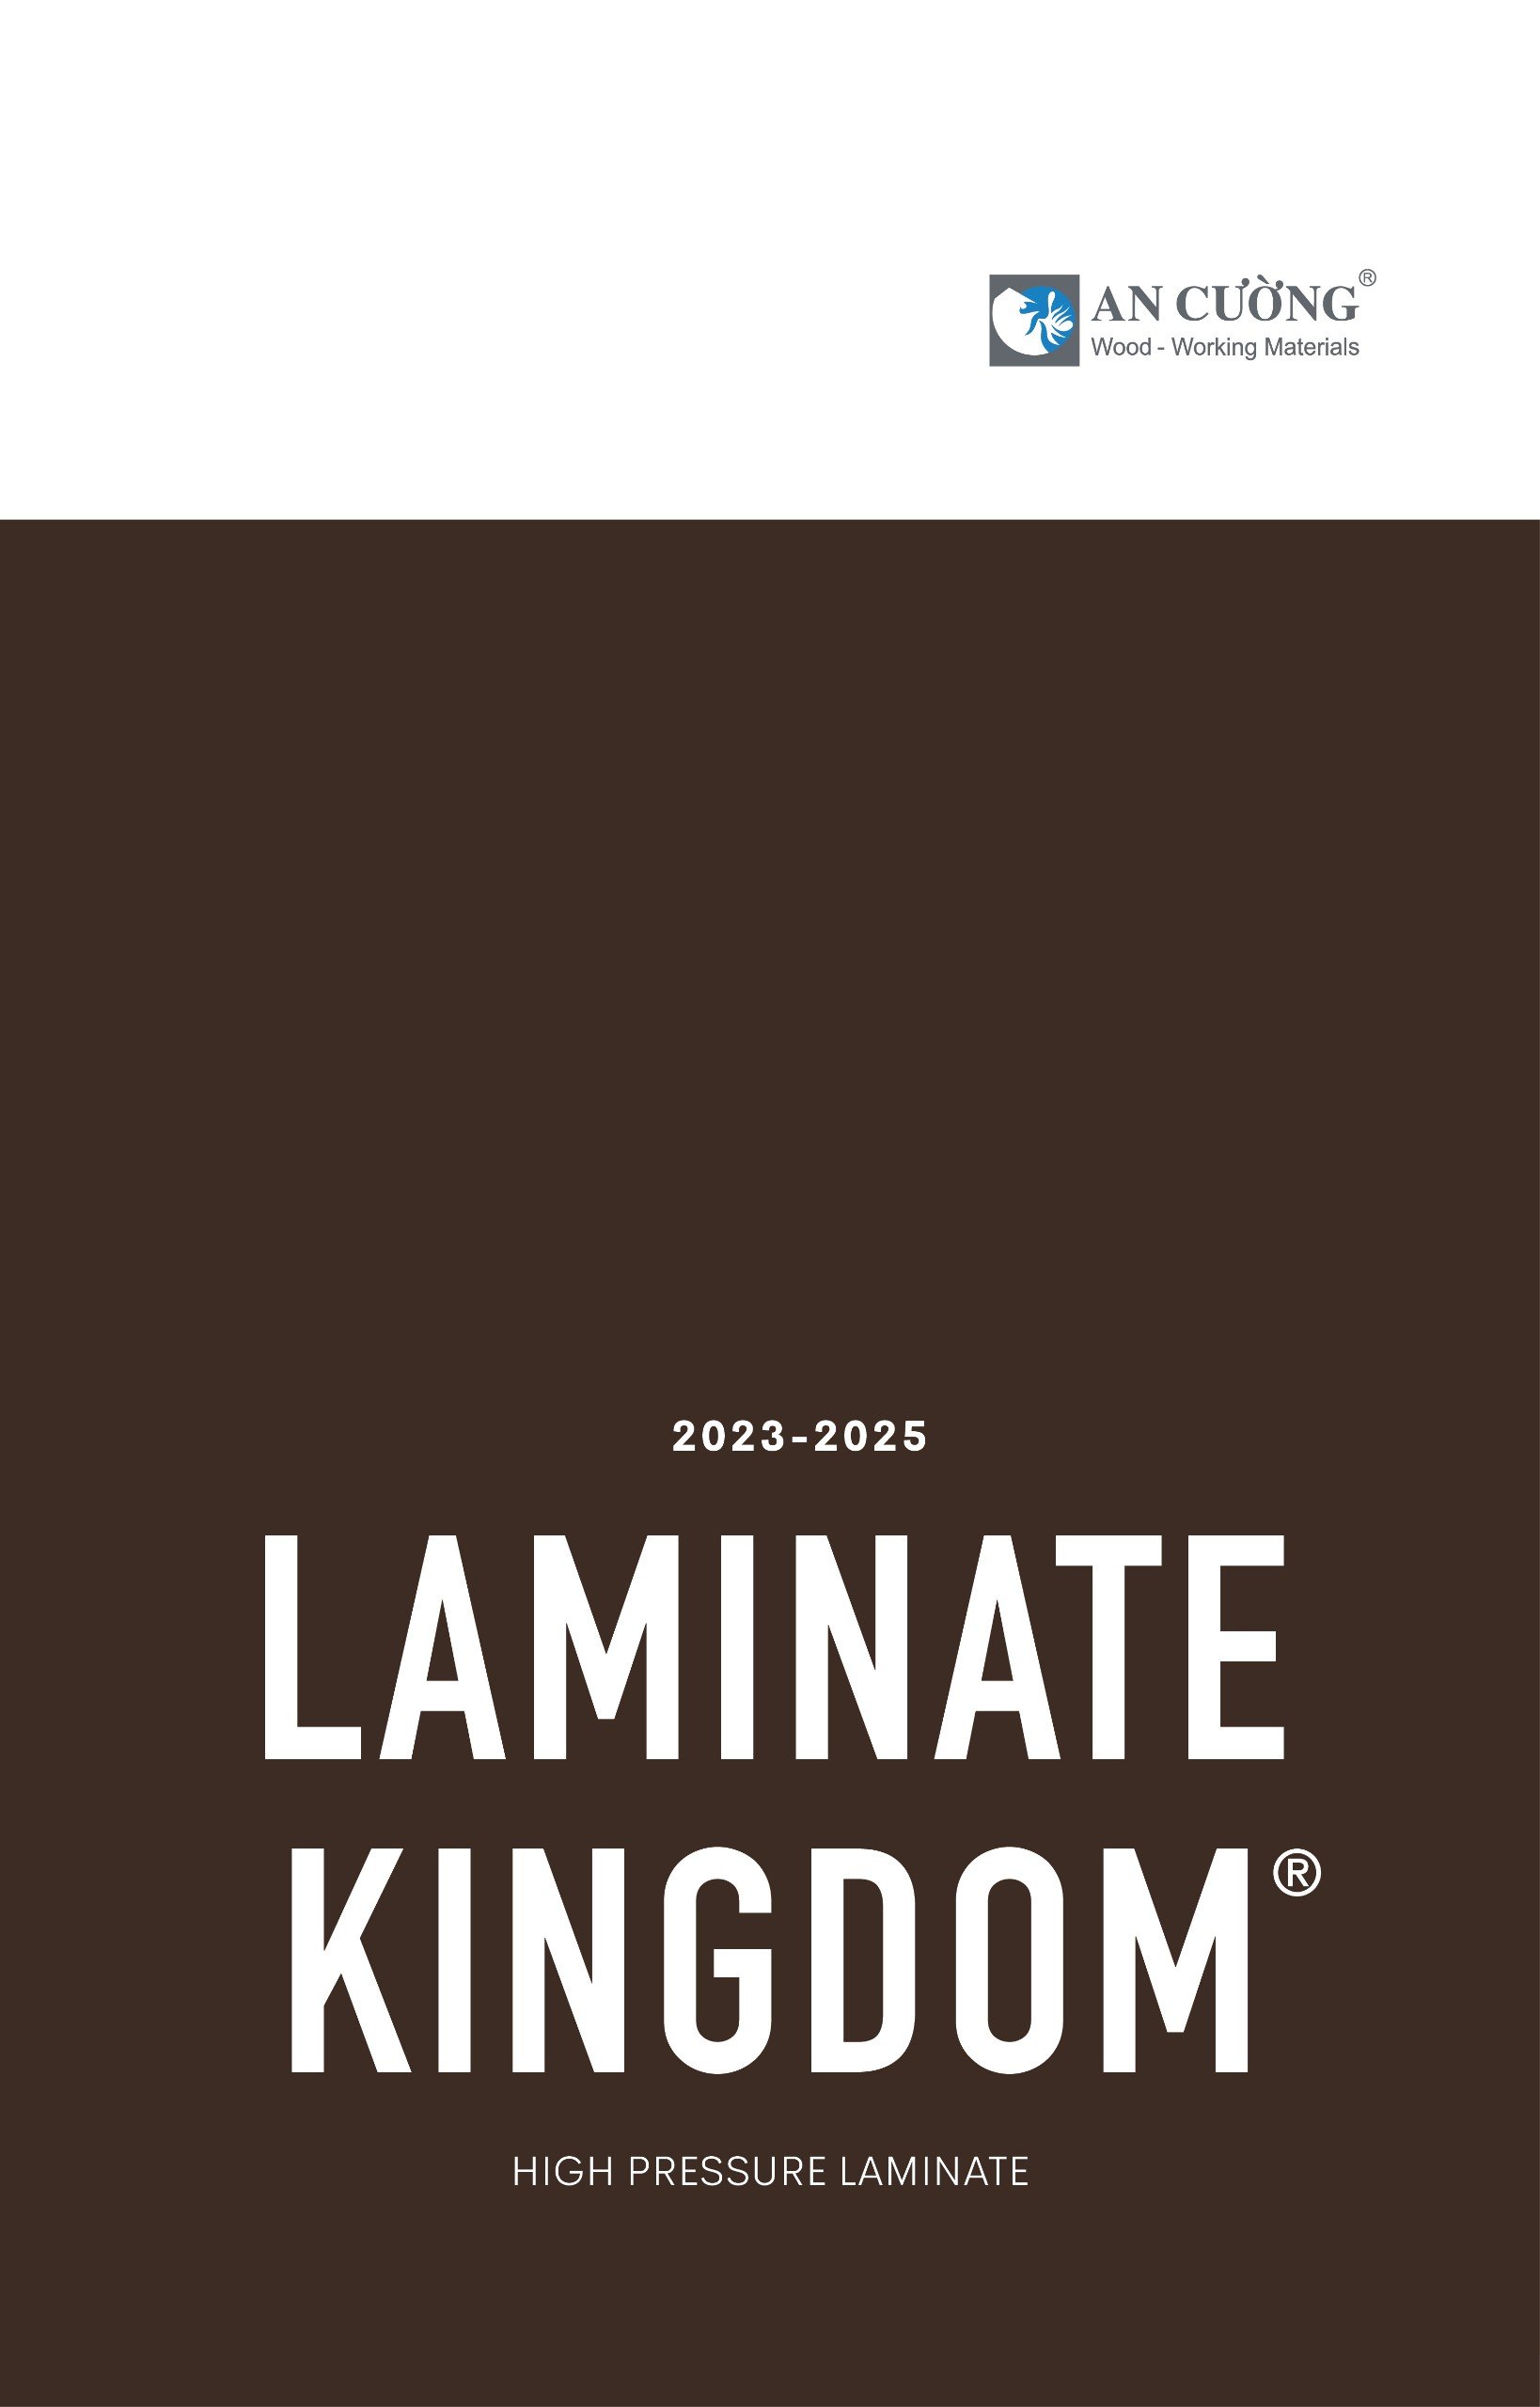 LAMINATE KINGDOM - HIGH PRESSURE LAMINATE